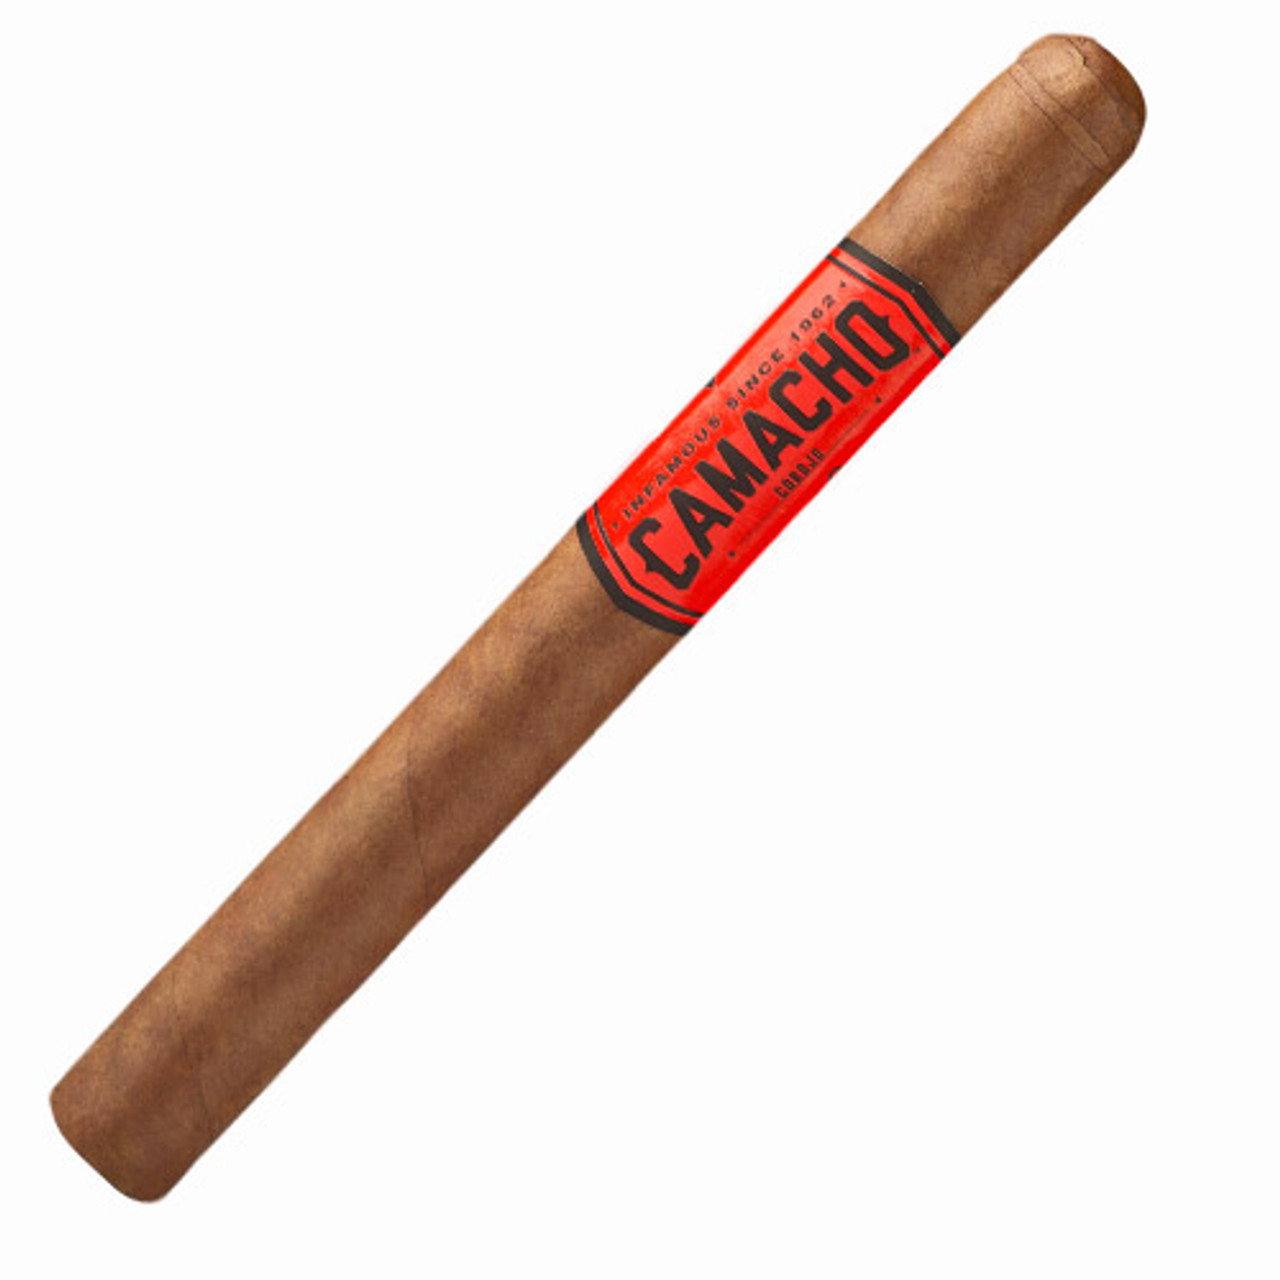 Camacho Corojo Churchill Cigars - 7 x 48 Single